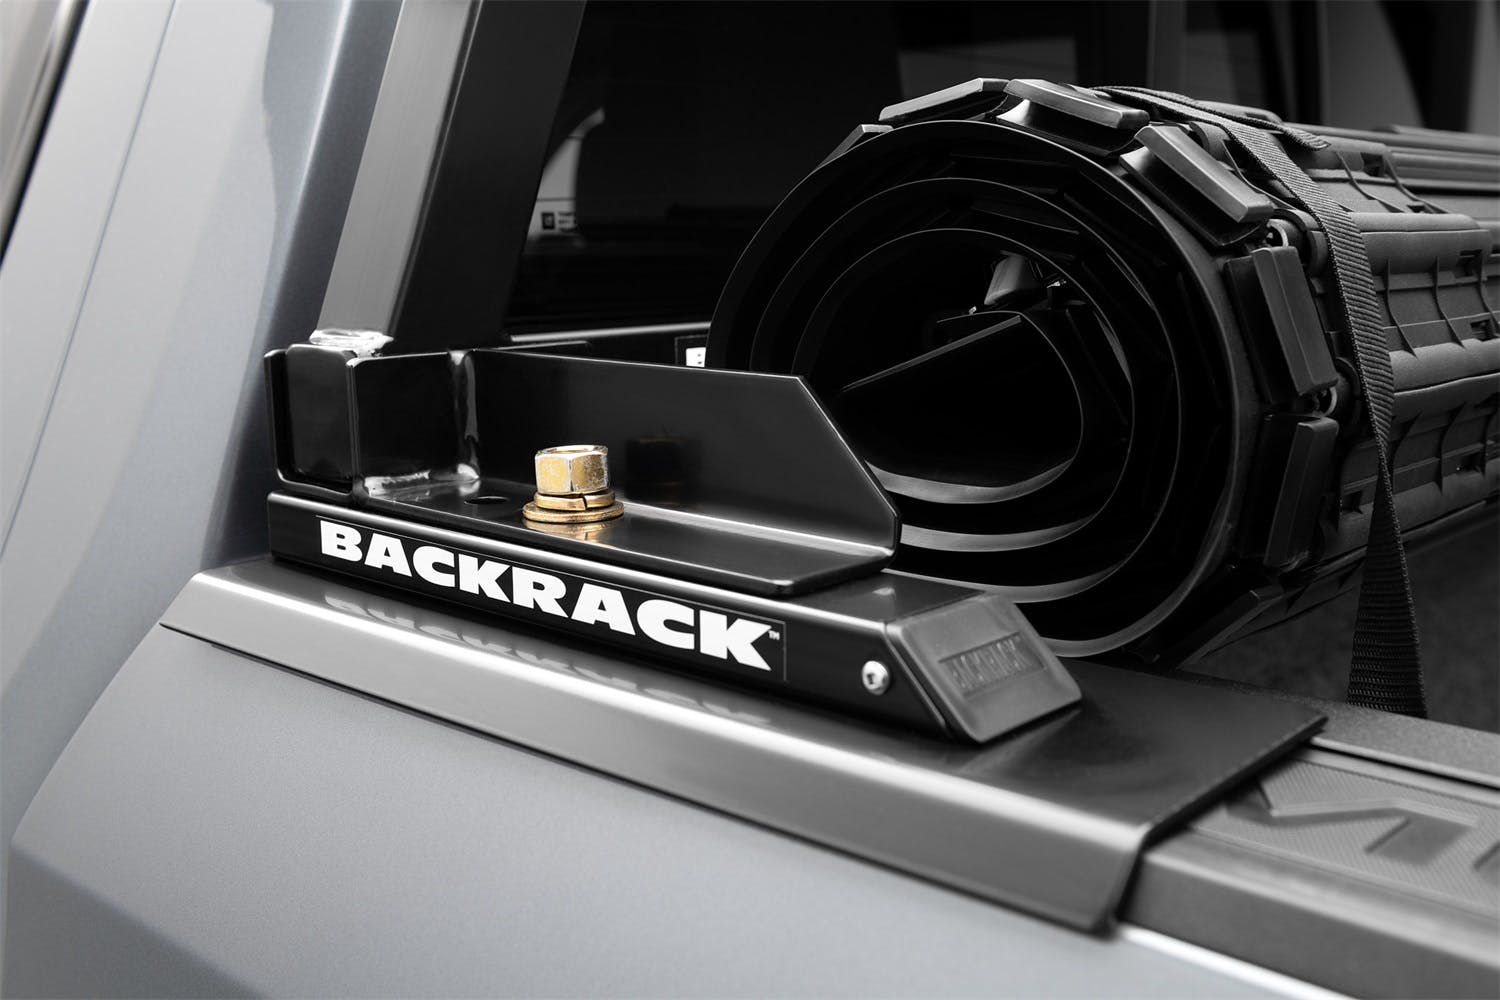 BACKRACK 14700 Frame Only, Hardware Kit Required - 30201, 30221